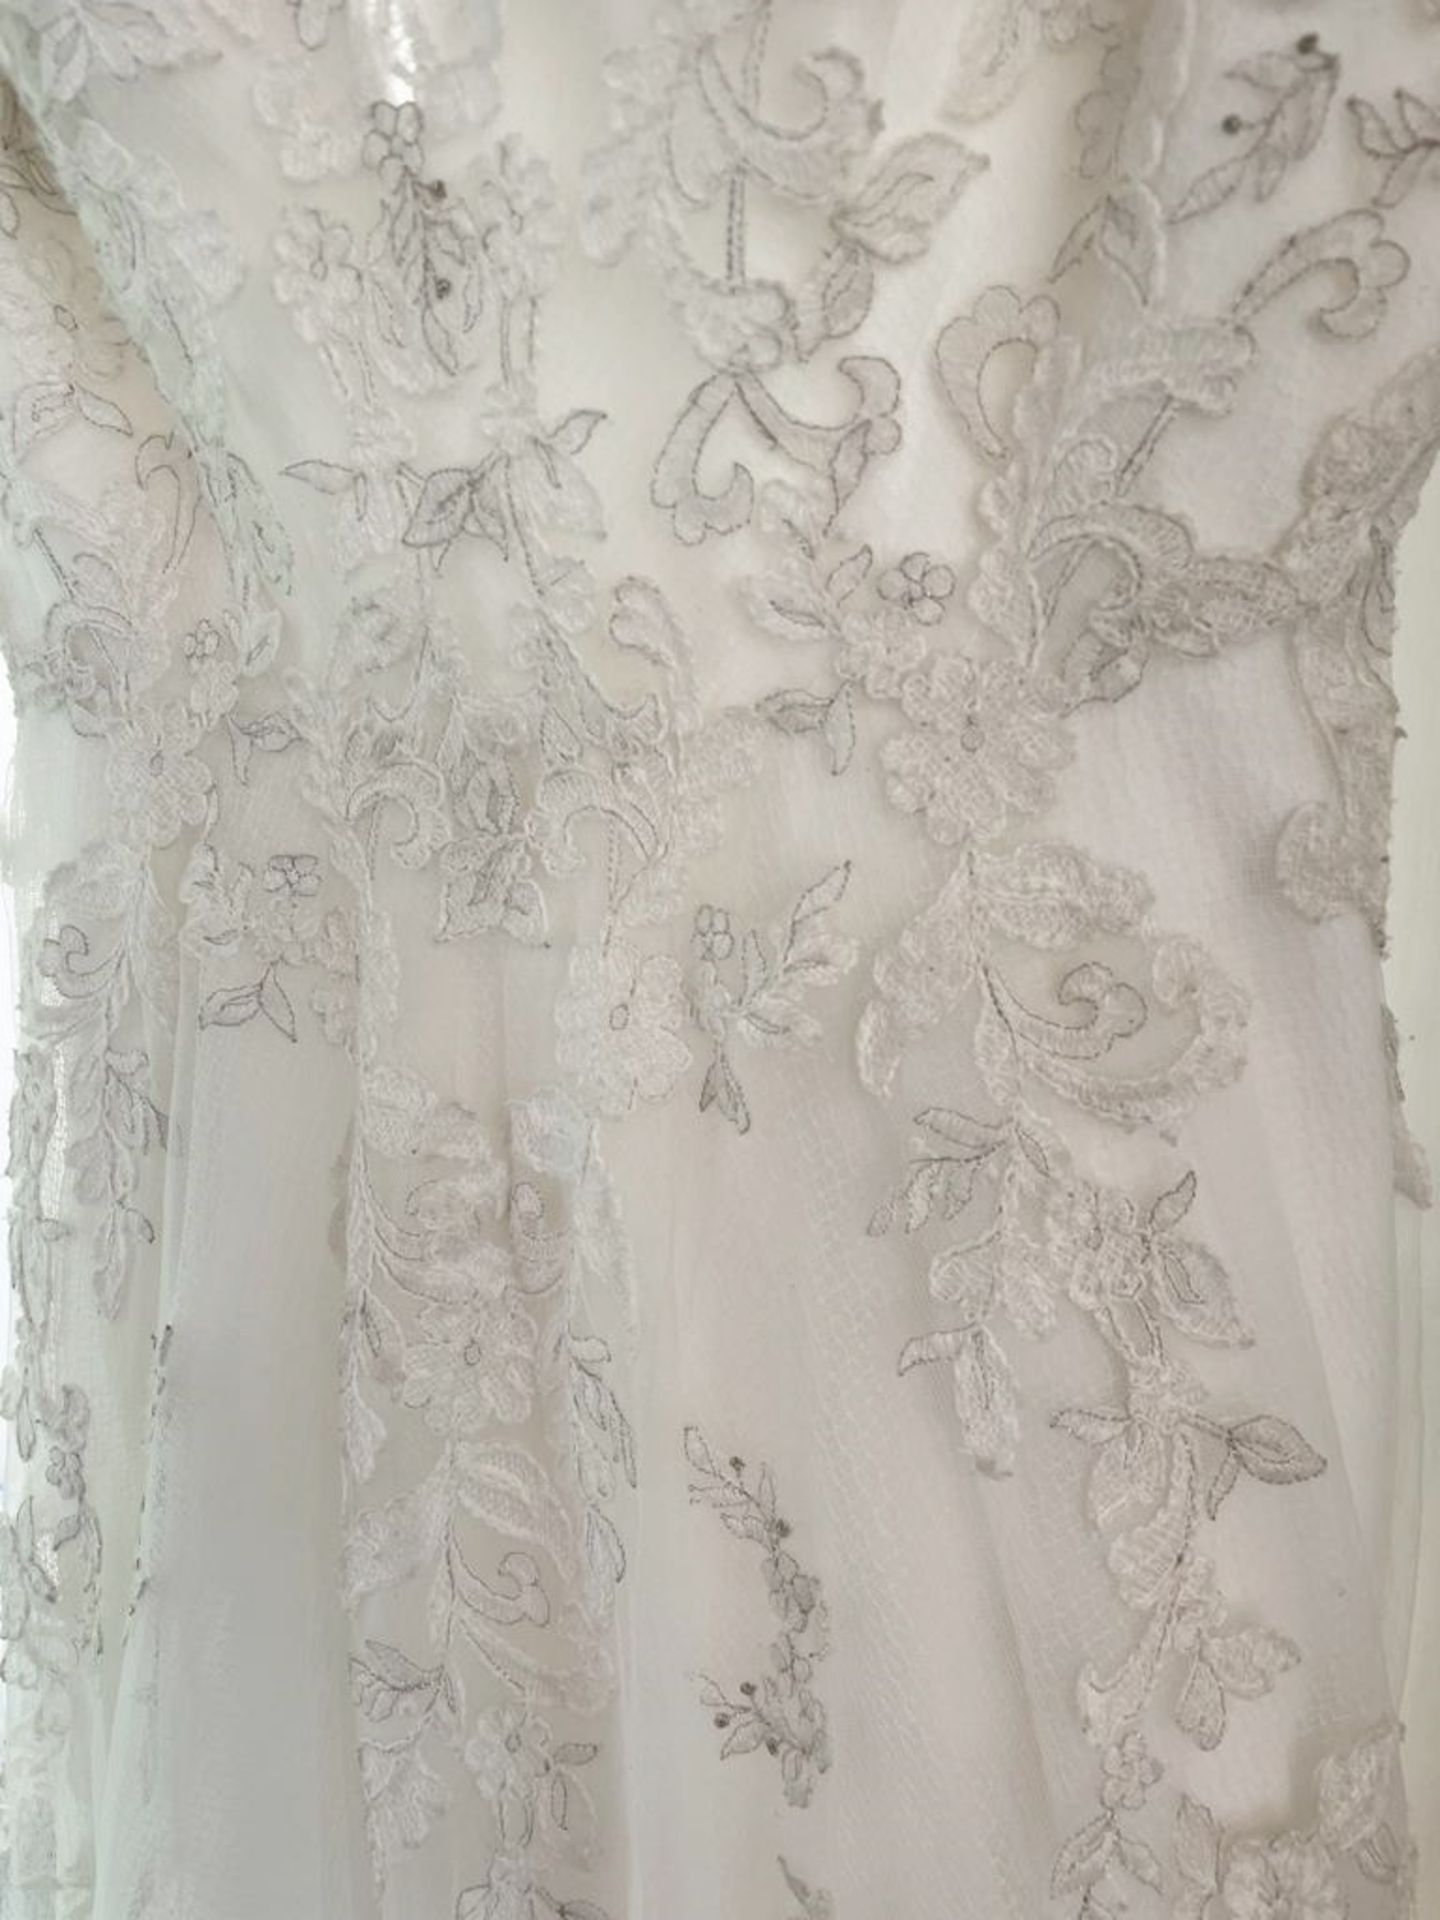 1 x REBECCA INGRAM 'Camille' Designer Wedding Dress Bridal Gown - Size: UK 10 - Original RRP £1,450 - Image 4 of 15